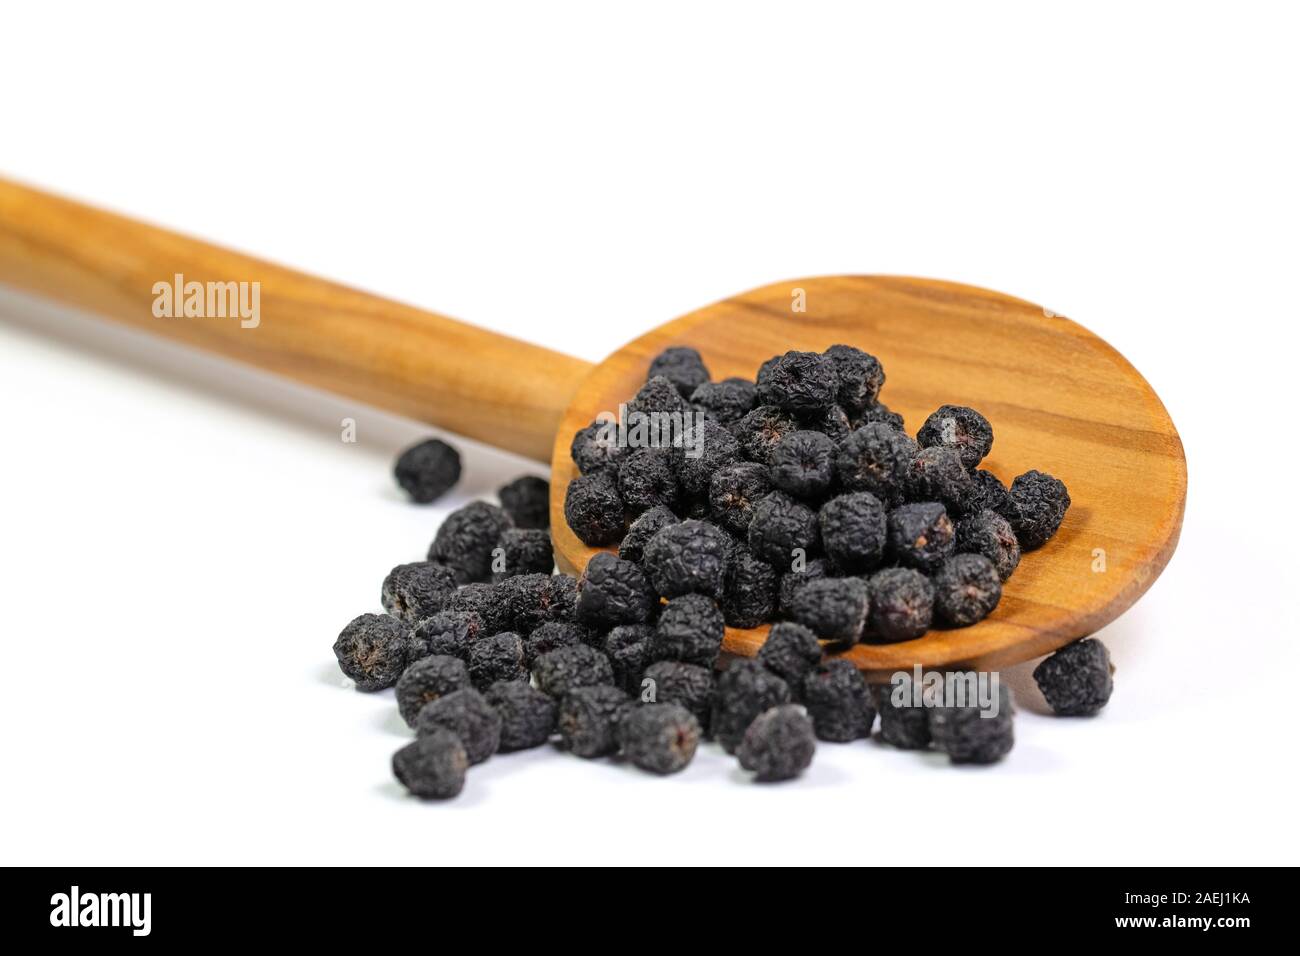 Dried Aronia berries, Aronia melanocarpa, on a wooden spoon Stock Photo